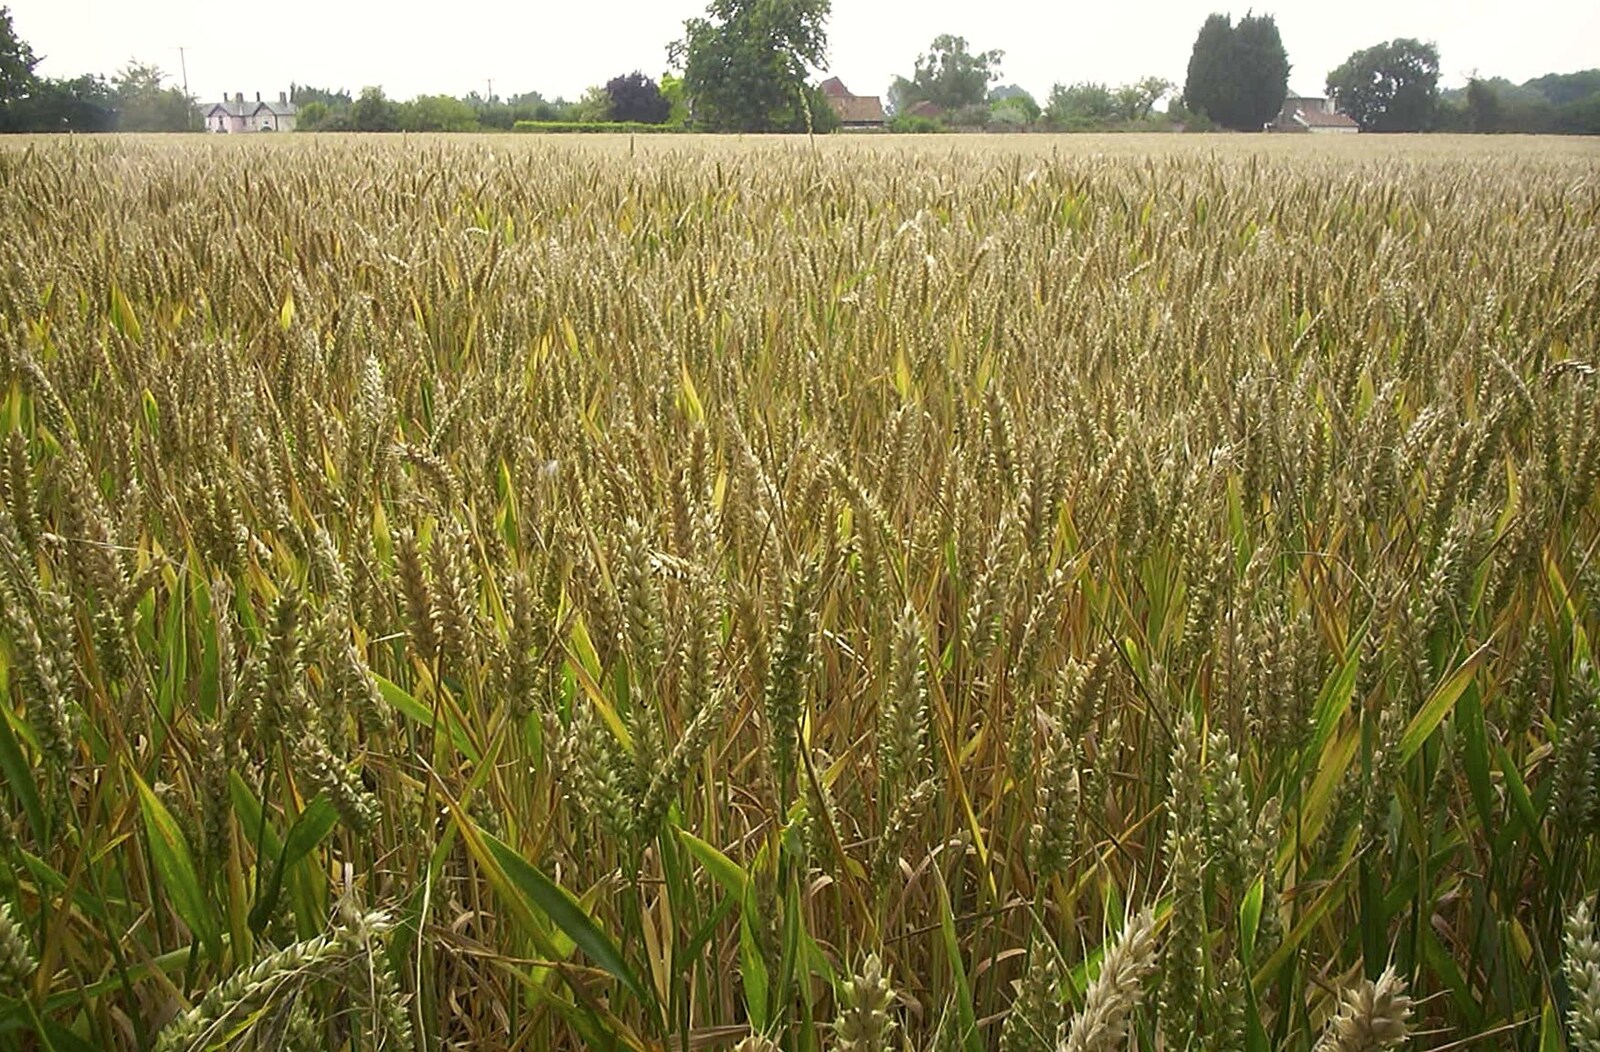 The BSCC in Debenham, and Bill's Housewarming Barbie, Yaxley, Suffolk - 31st July 2004: A field of wheat